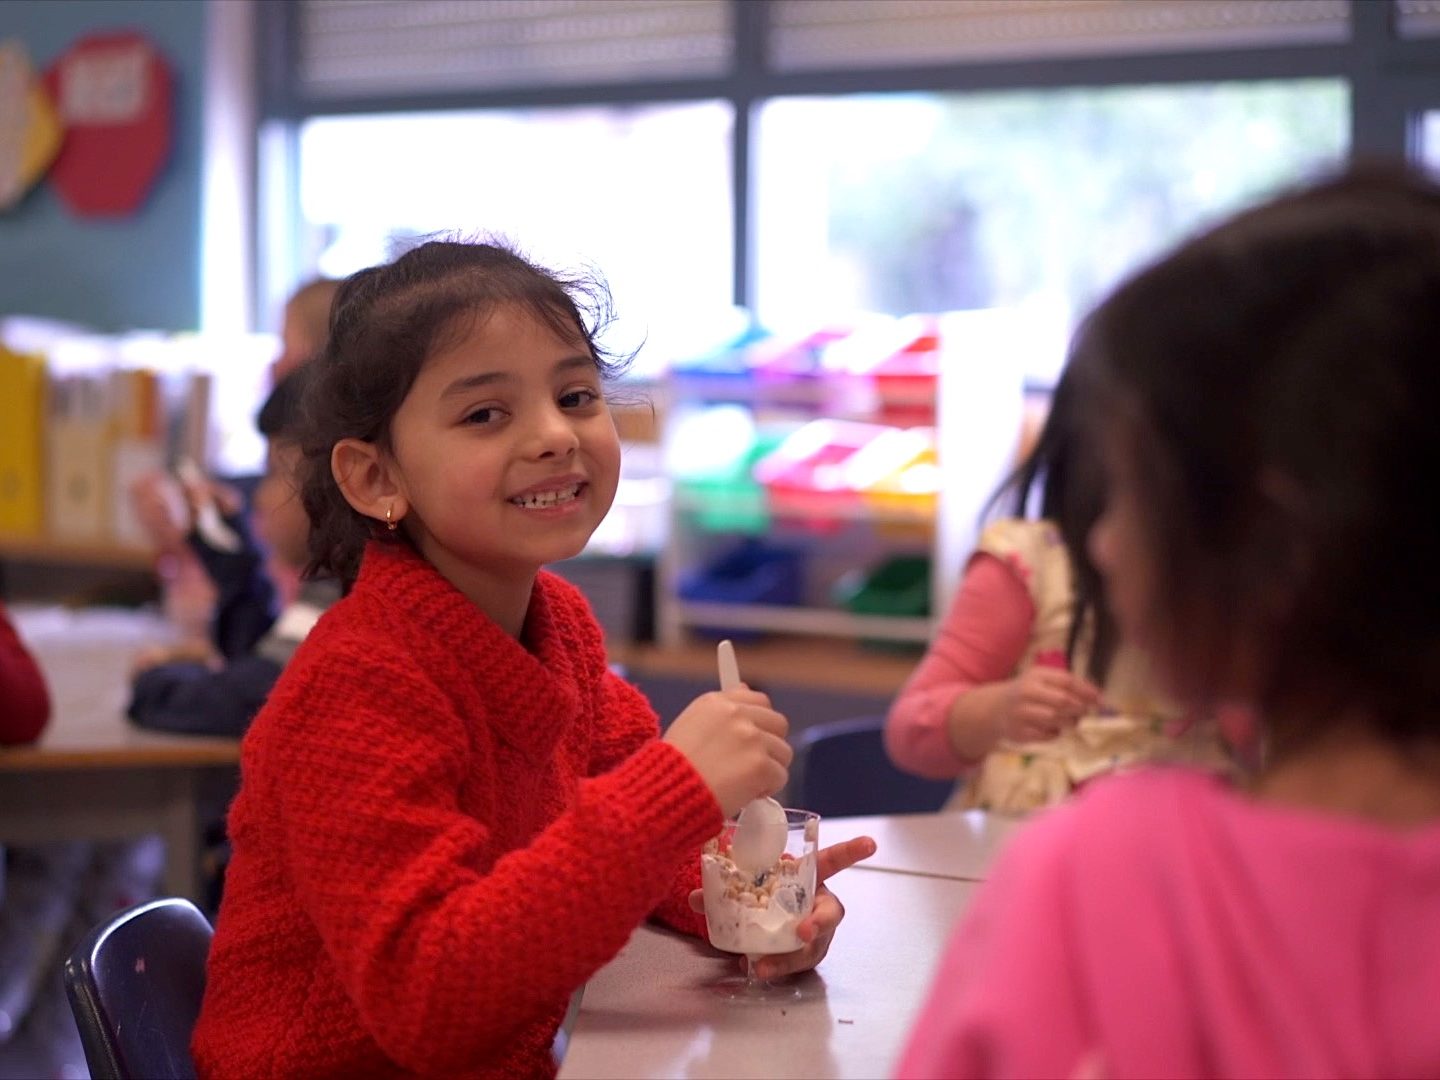 Kindergarten student smiling and enjoying a yogurt parfait